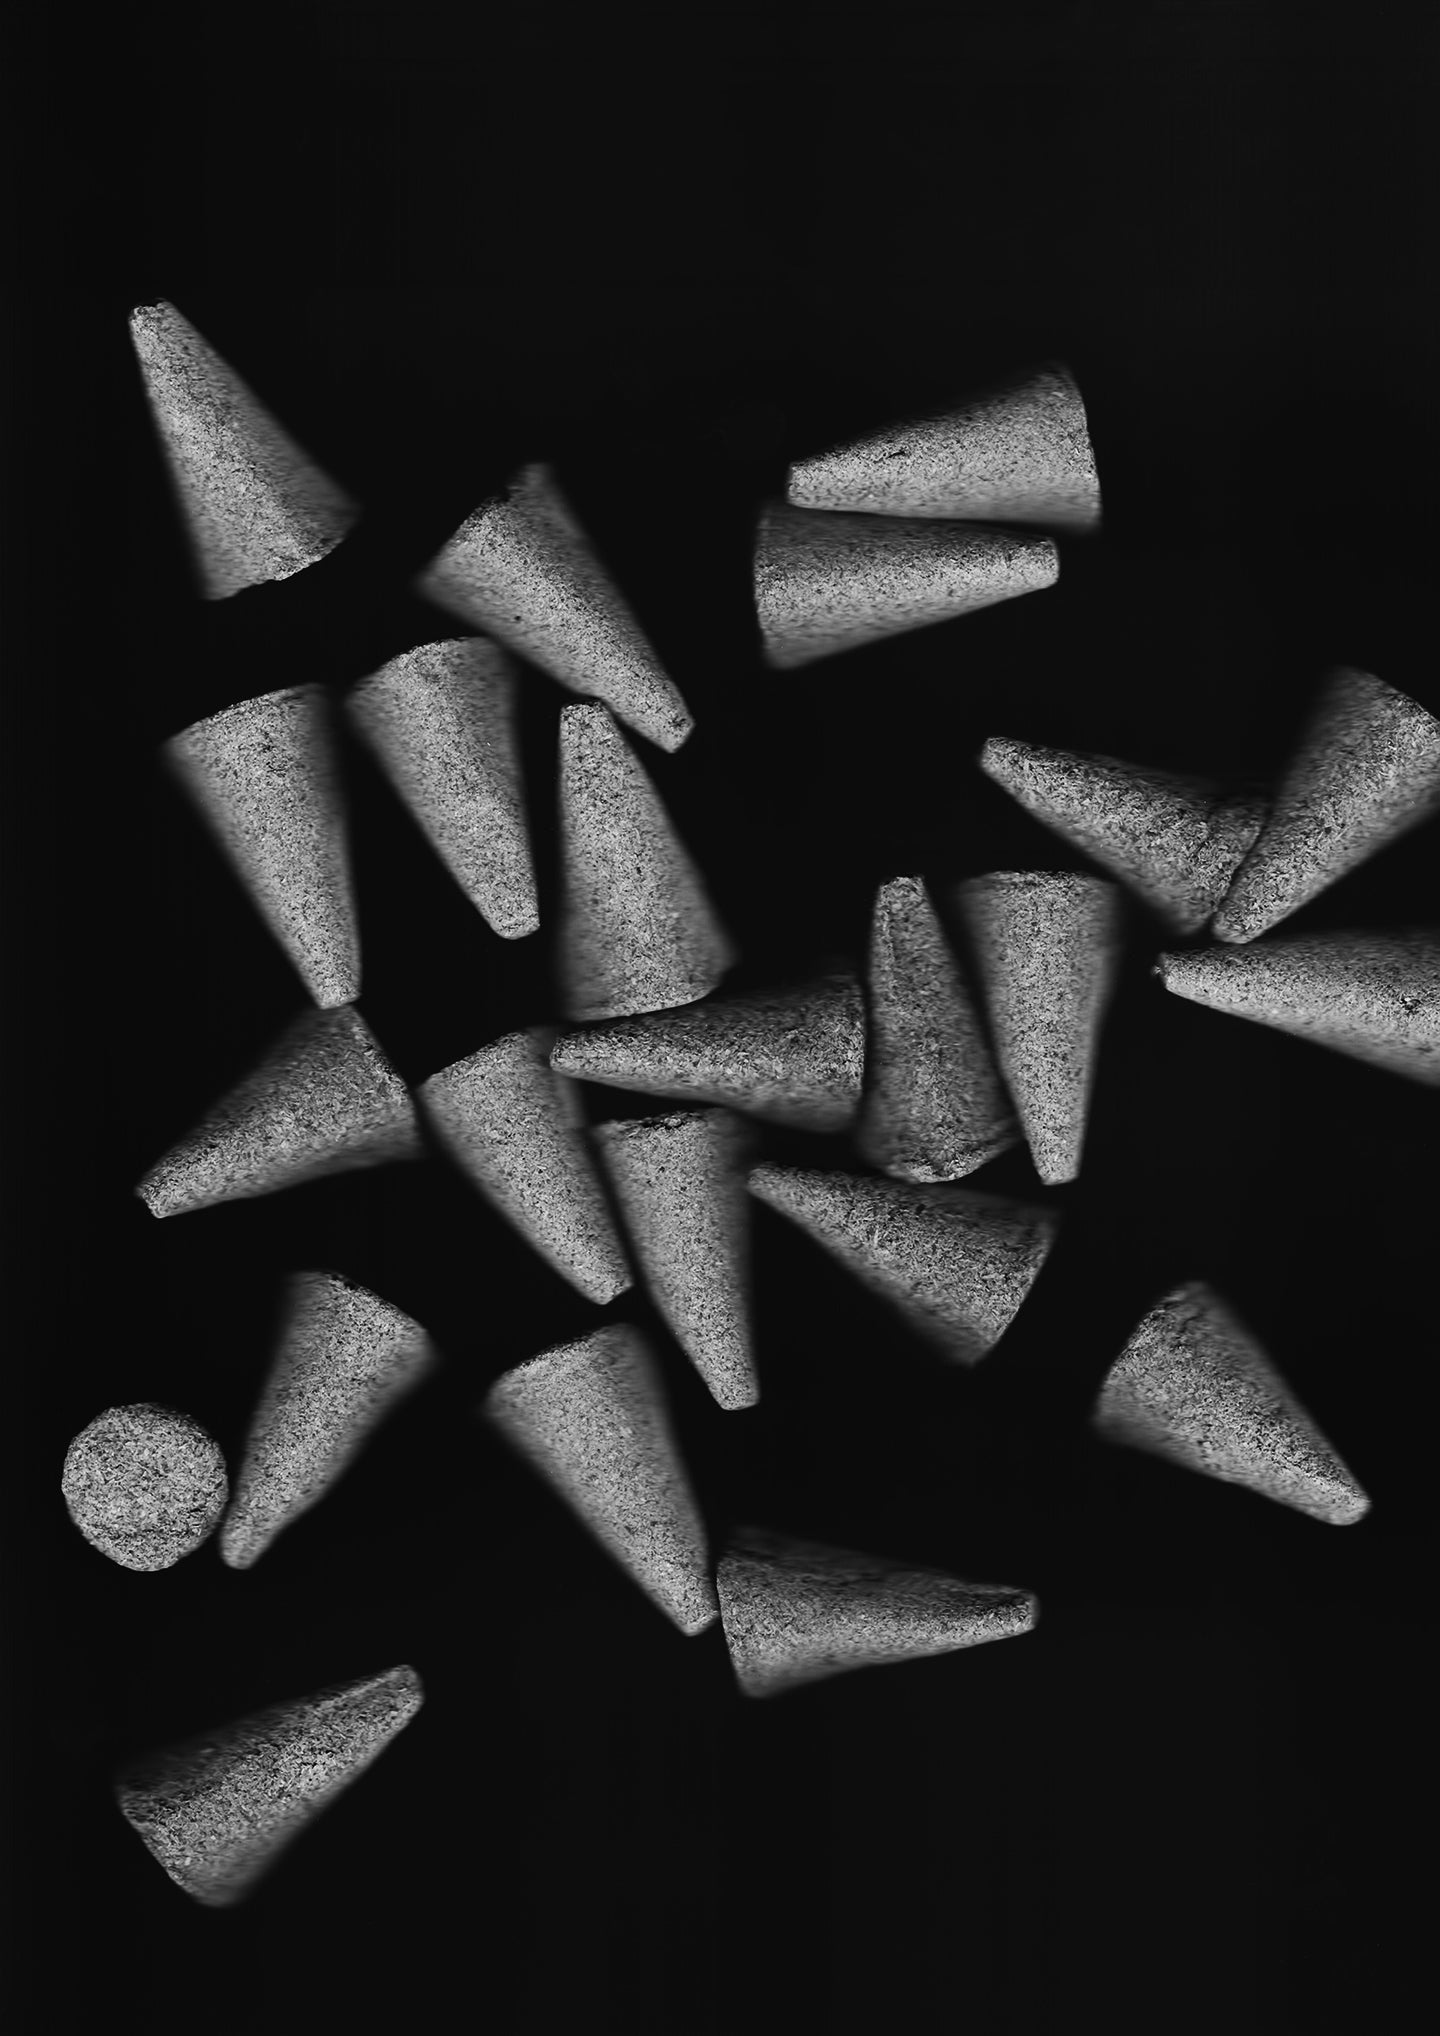 peruvian palo santo incense cones scanned in black and white 